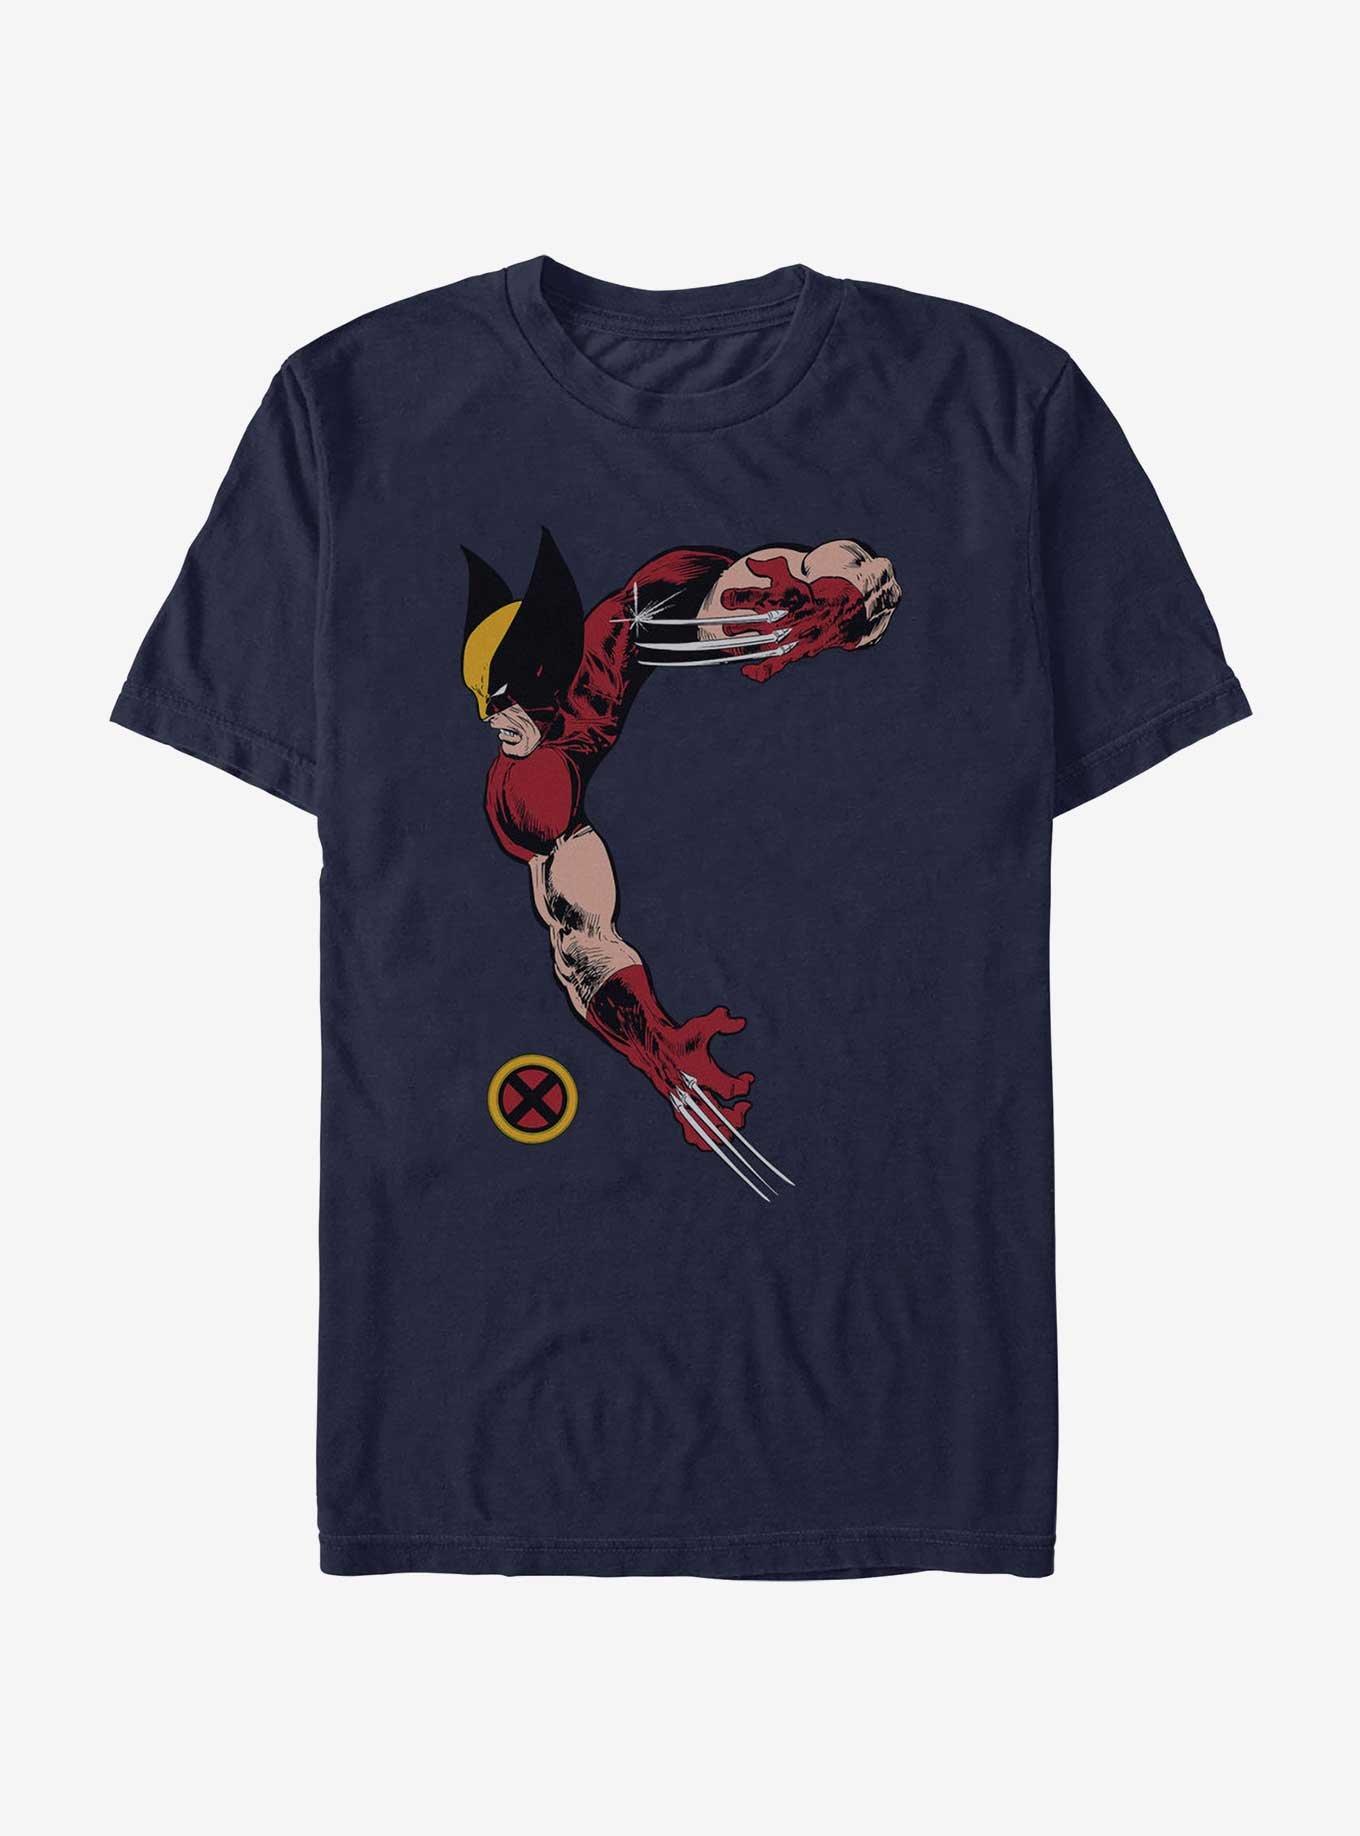 X-Men Wolverine Crop T-Shirt, NAVY, hi-res